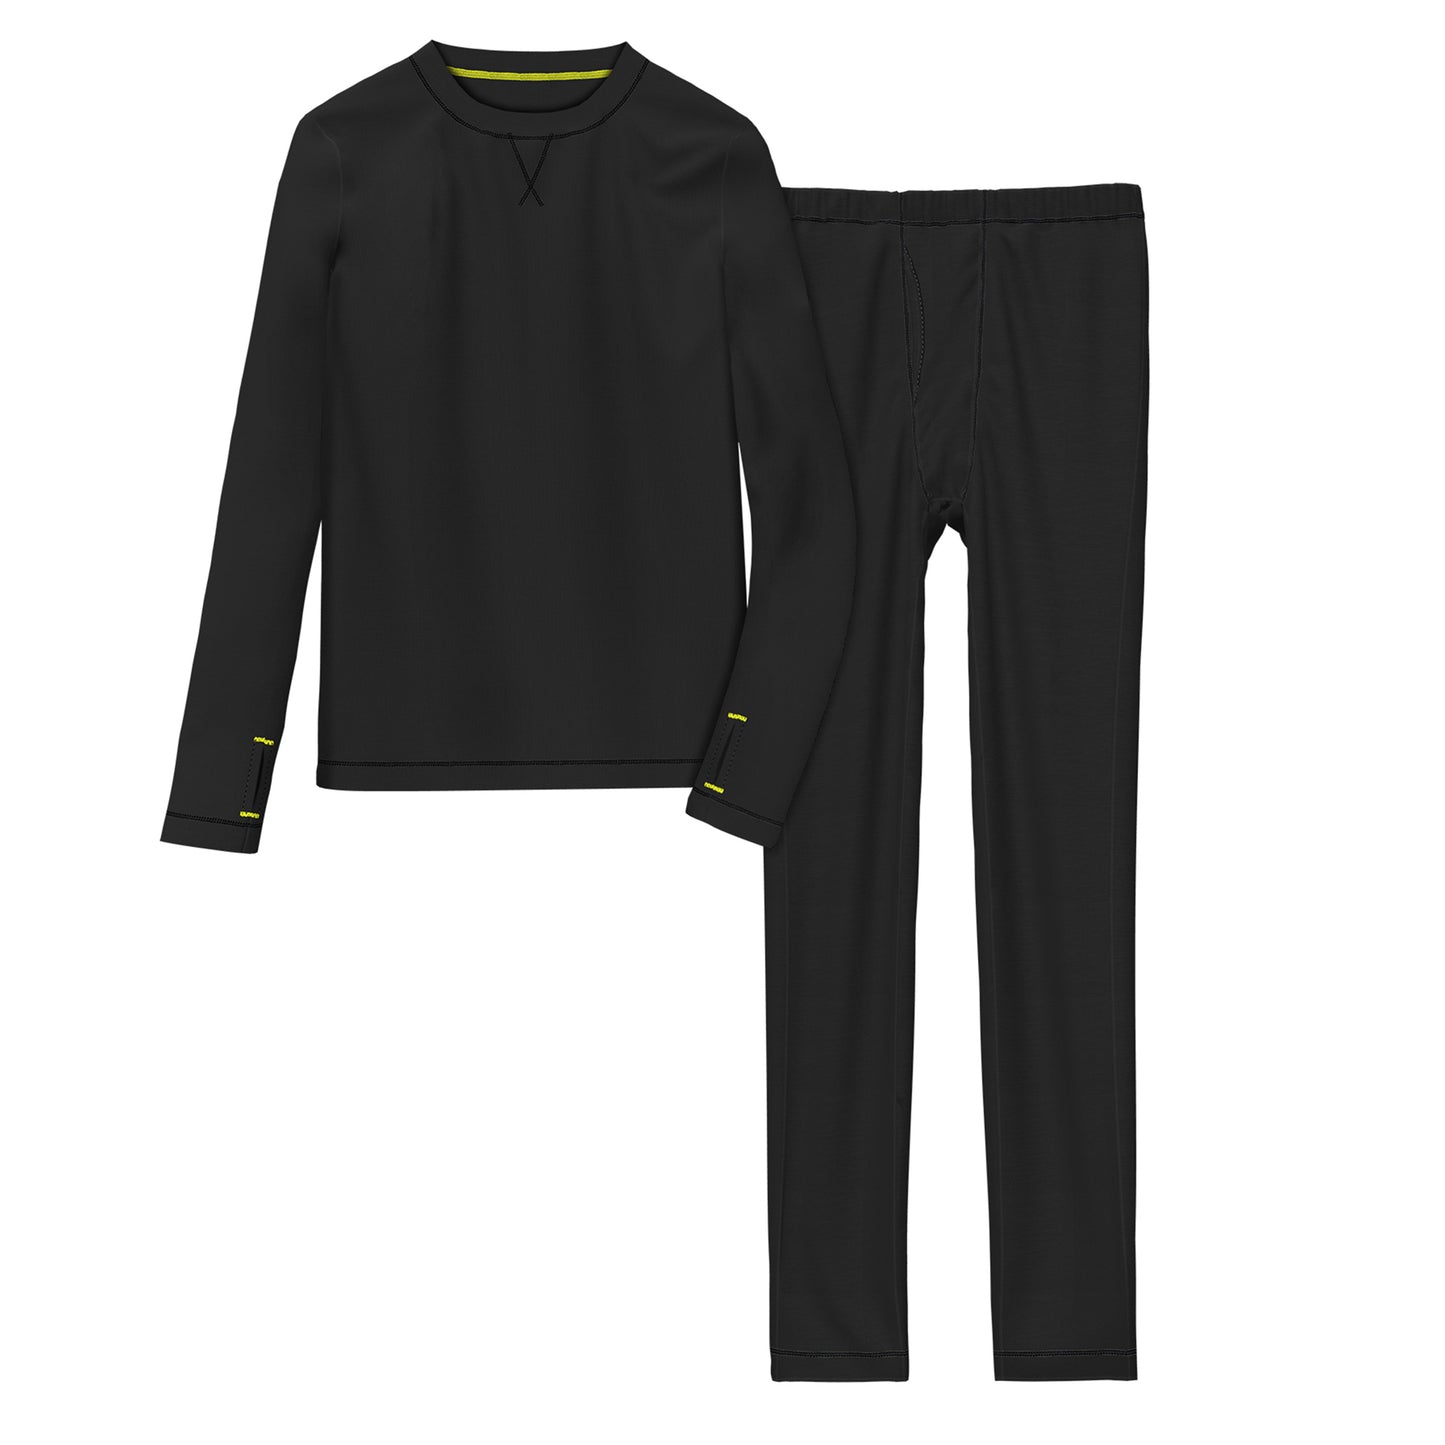 Black;@A black long sleeve t-shirt and pant set